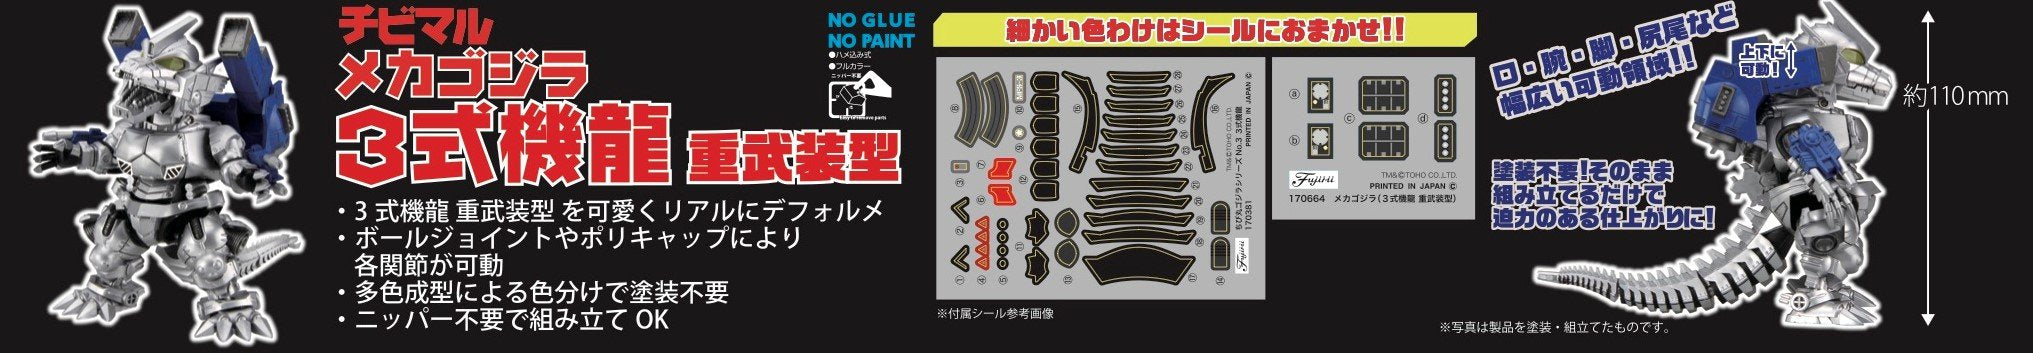 Fujimi Chibimaru Godzilla5 Mechagodzilla 3 Heavy Armed Type Japanese Gundam Kit